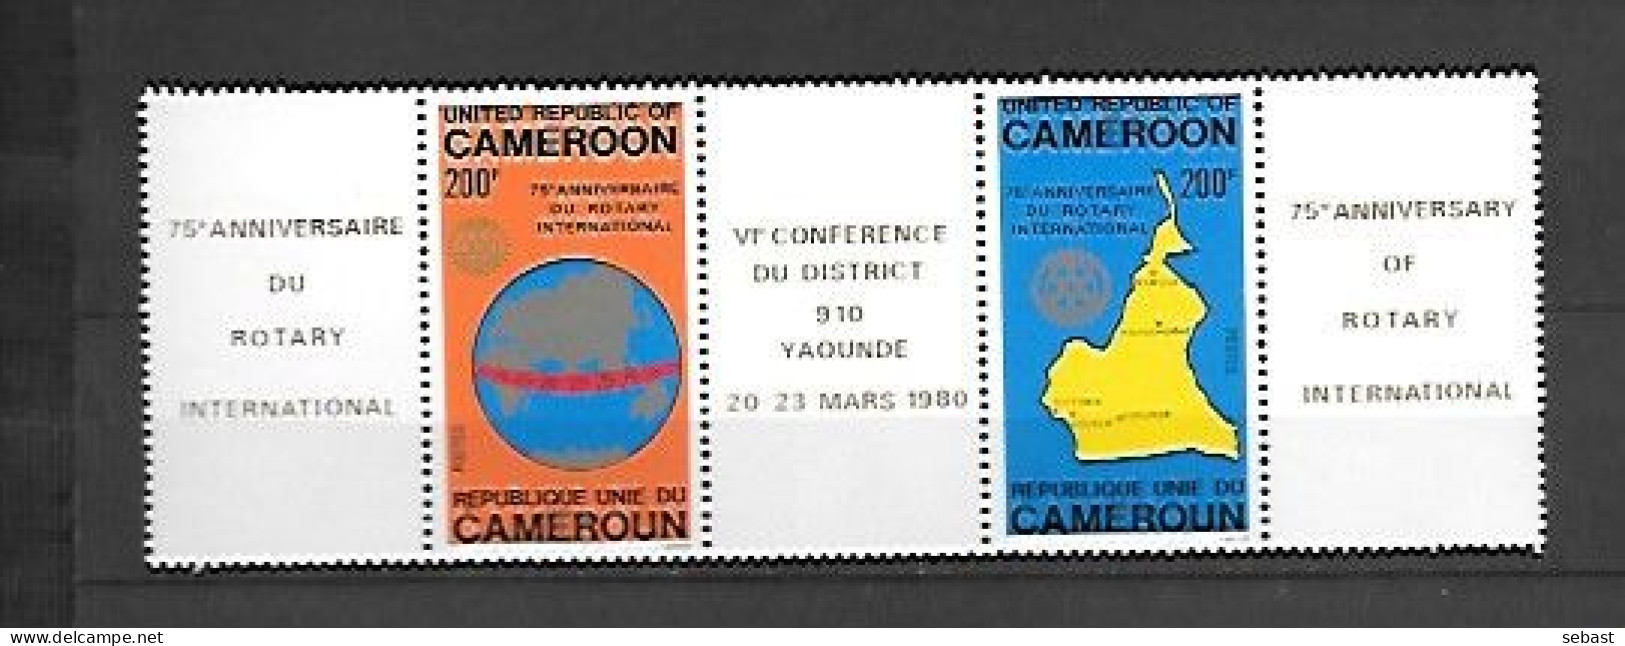 TIMBRE NEUF DU CAMEROUN DE 1980 N° MICHEL 925/26 - Camerún (1960-...)